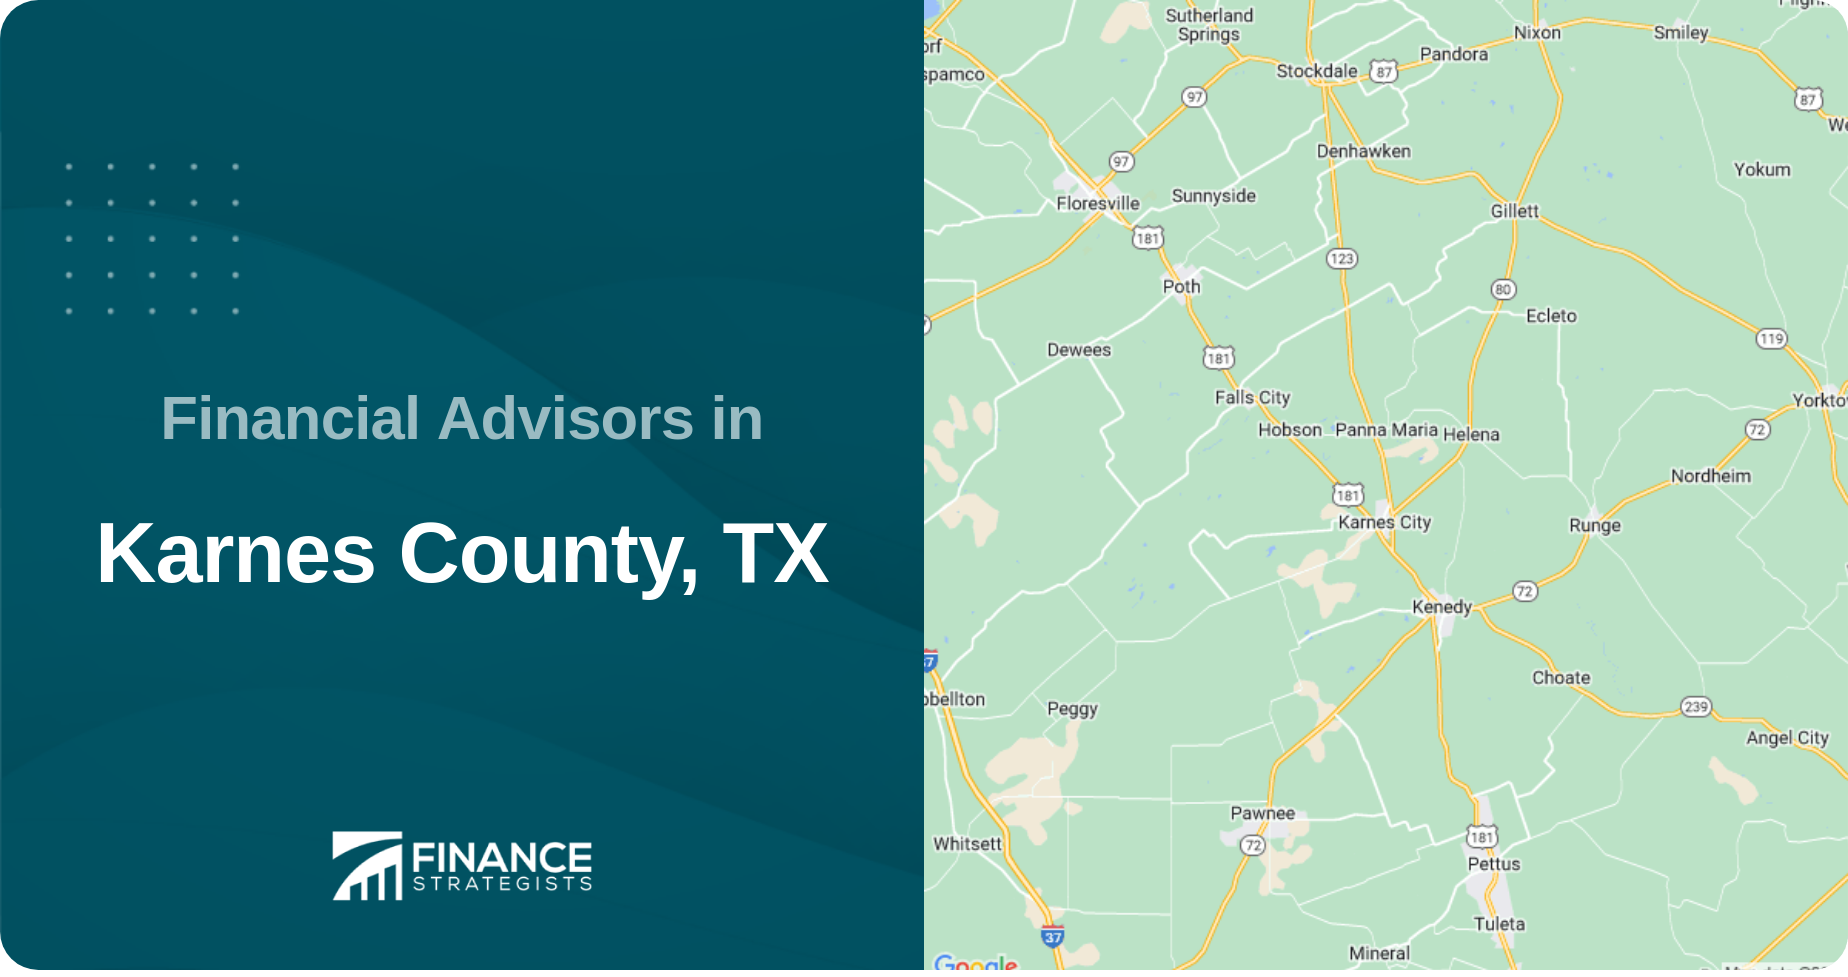 Financial Advisors in Karnes County, TX